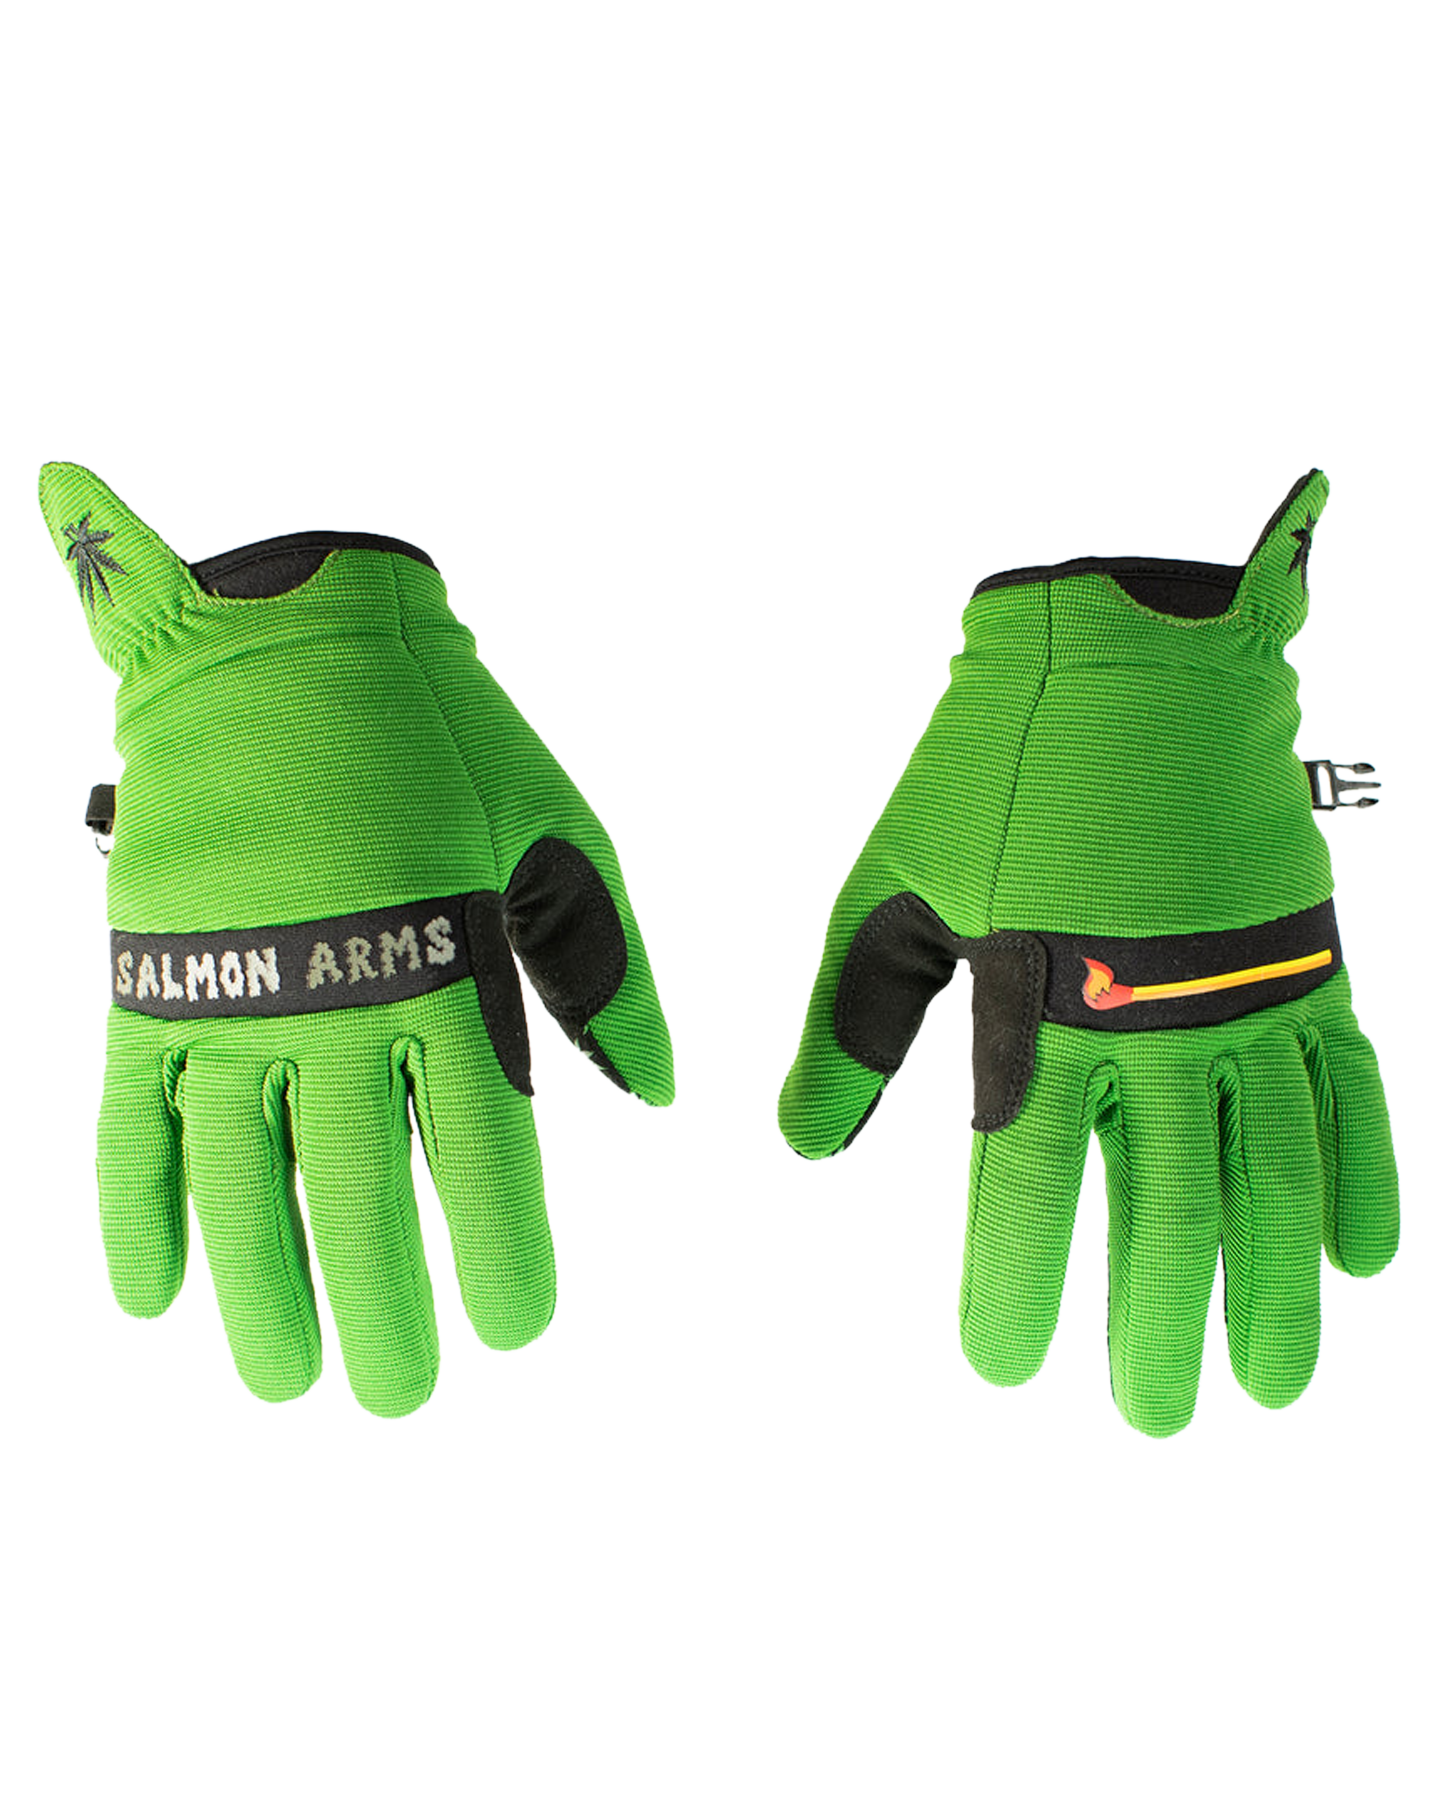 Salmon Arms Spring Snow Glove - Leaf Men's Snow Gloves & Mittens - Trojan Wake Ski Snow